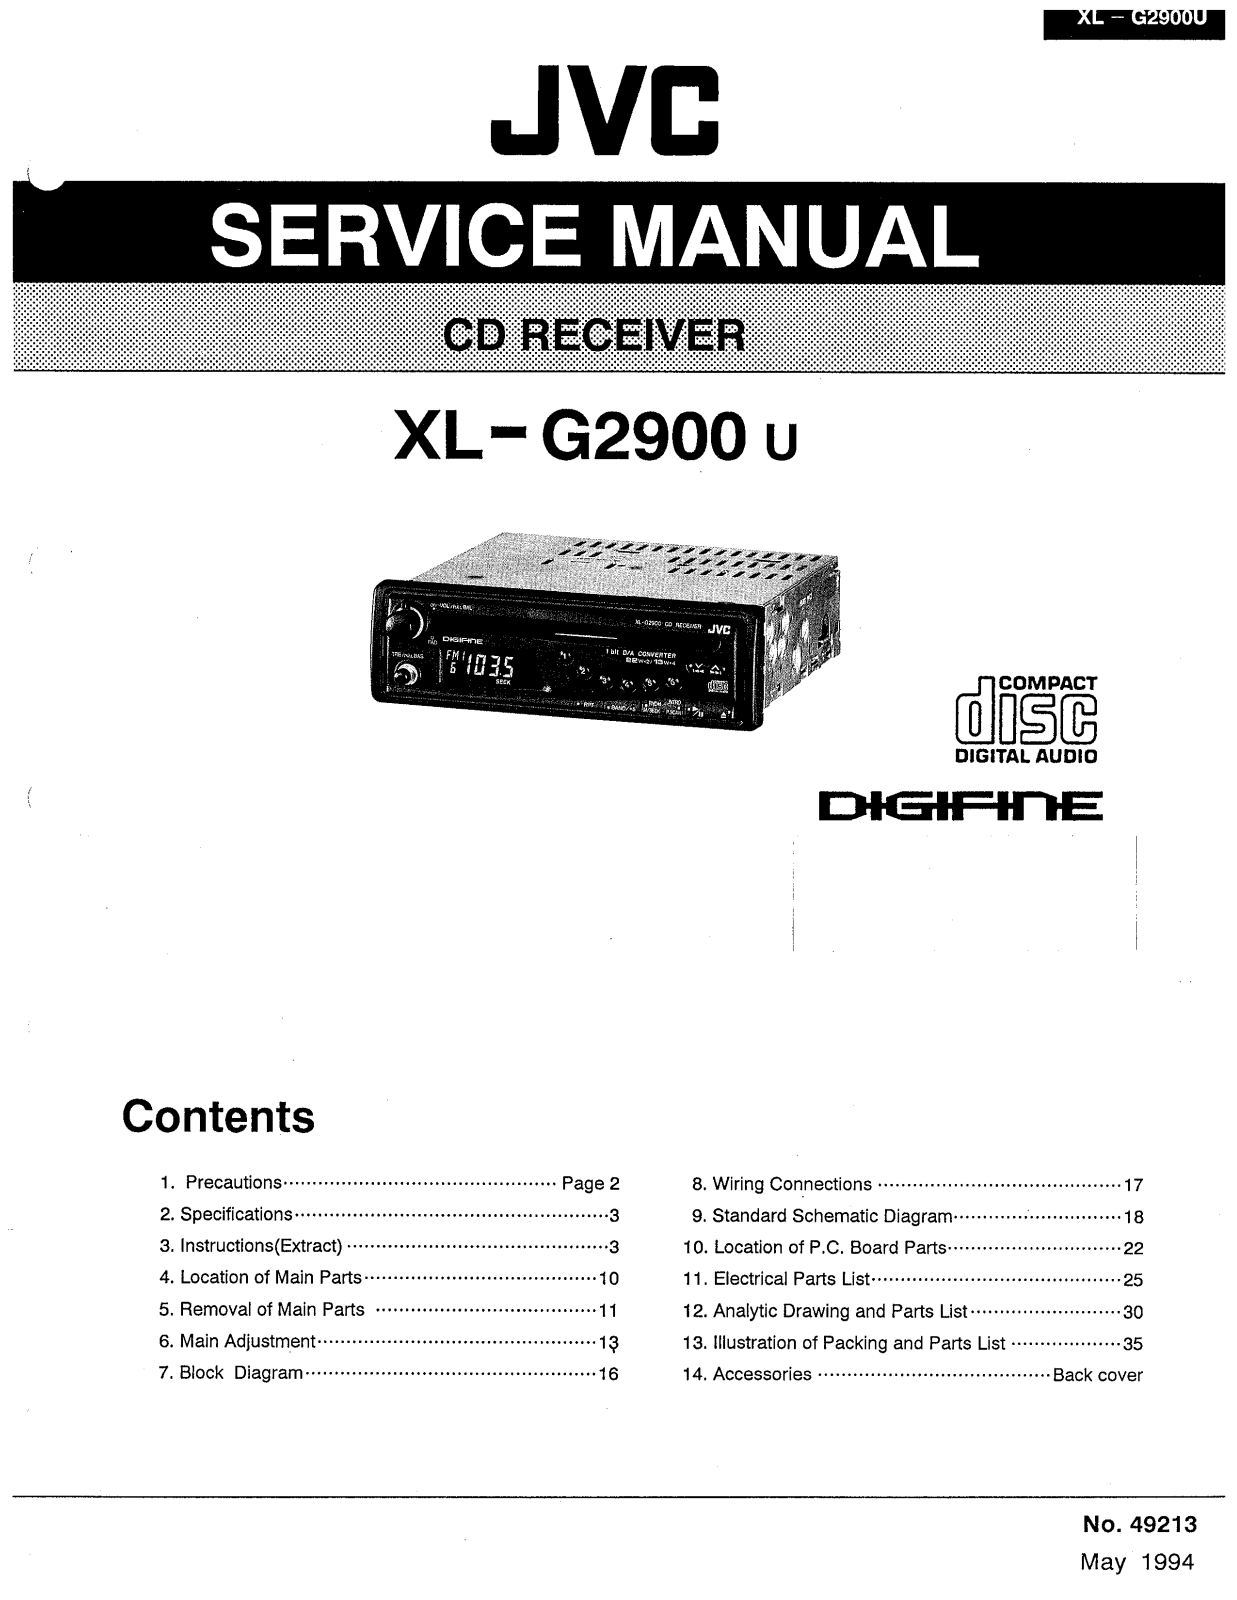 JVC XL-G2900 Service Manual